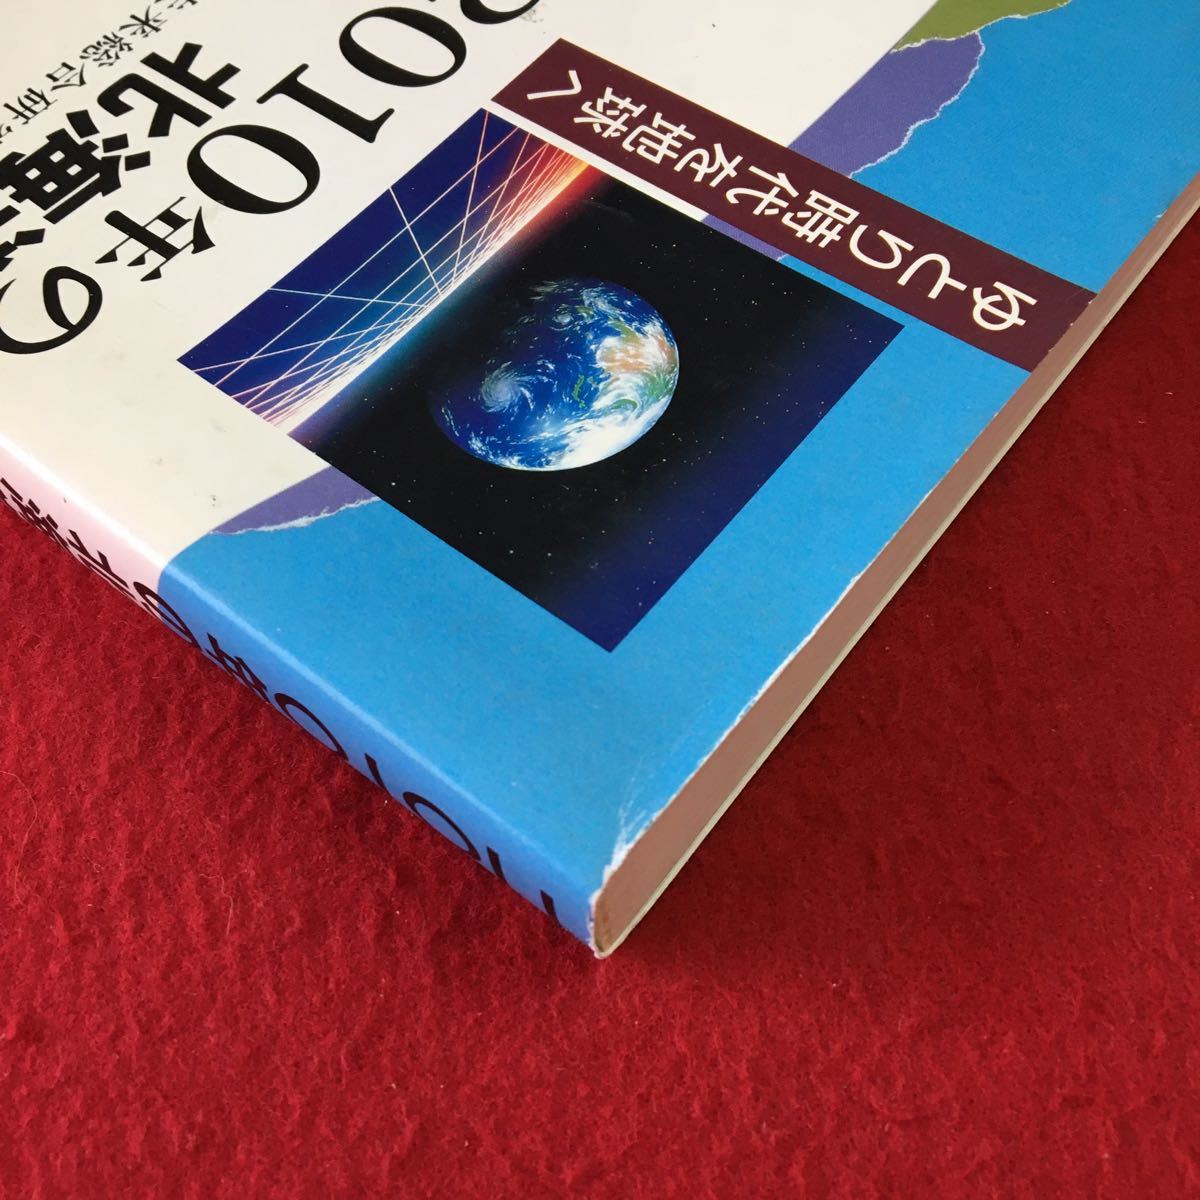 S7h-015 2010年の北海道 ゆとり時代を地球へ 二十一世紀北海道の役割と期待 2010年の北海道 1992年3月19日 第1刷_画像3